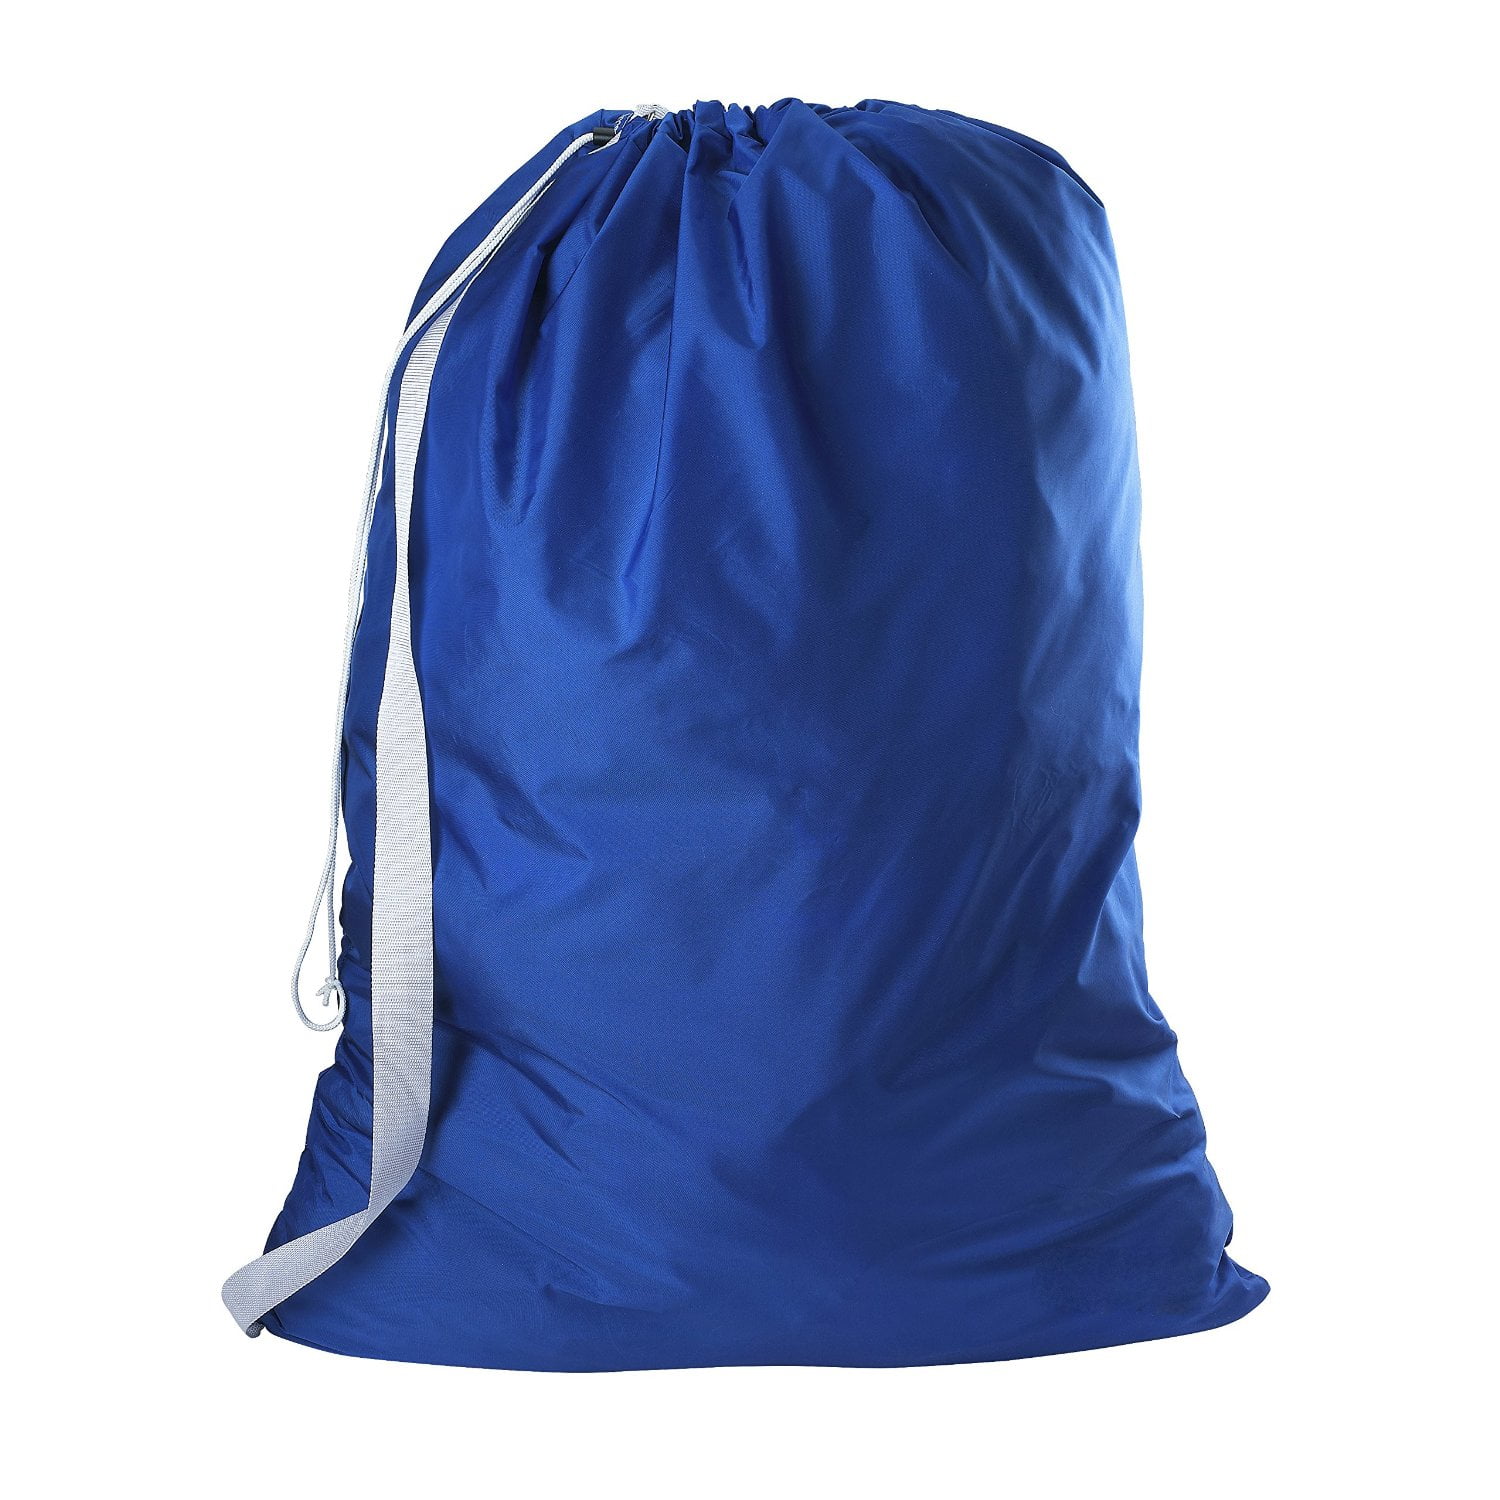 Nylon Laundry Bag with Shoulder Strap - Royal Blue - 30